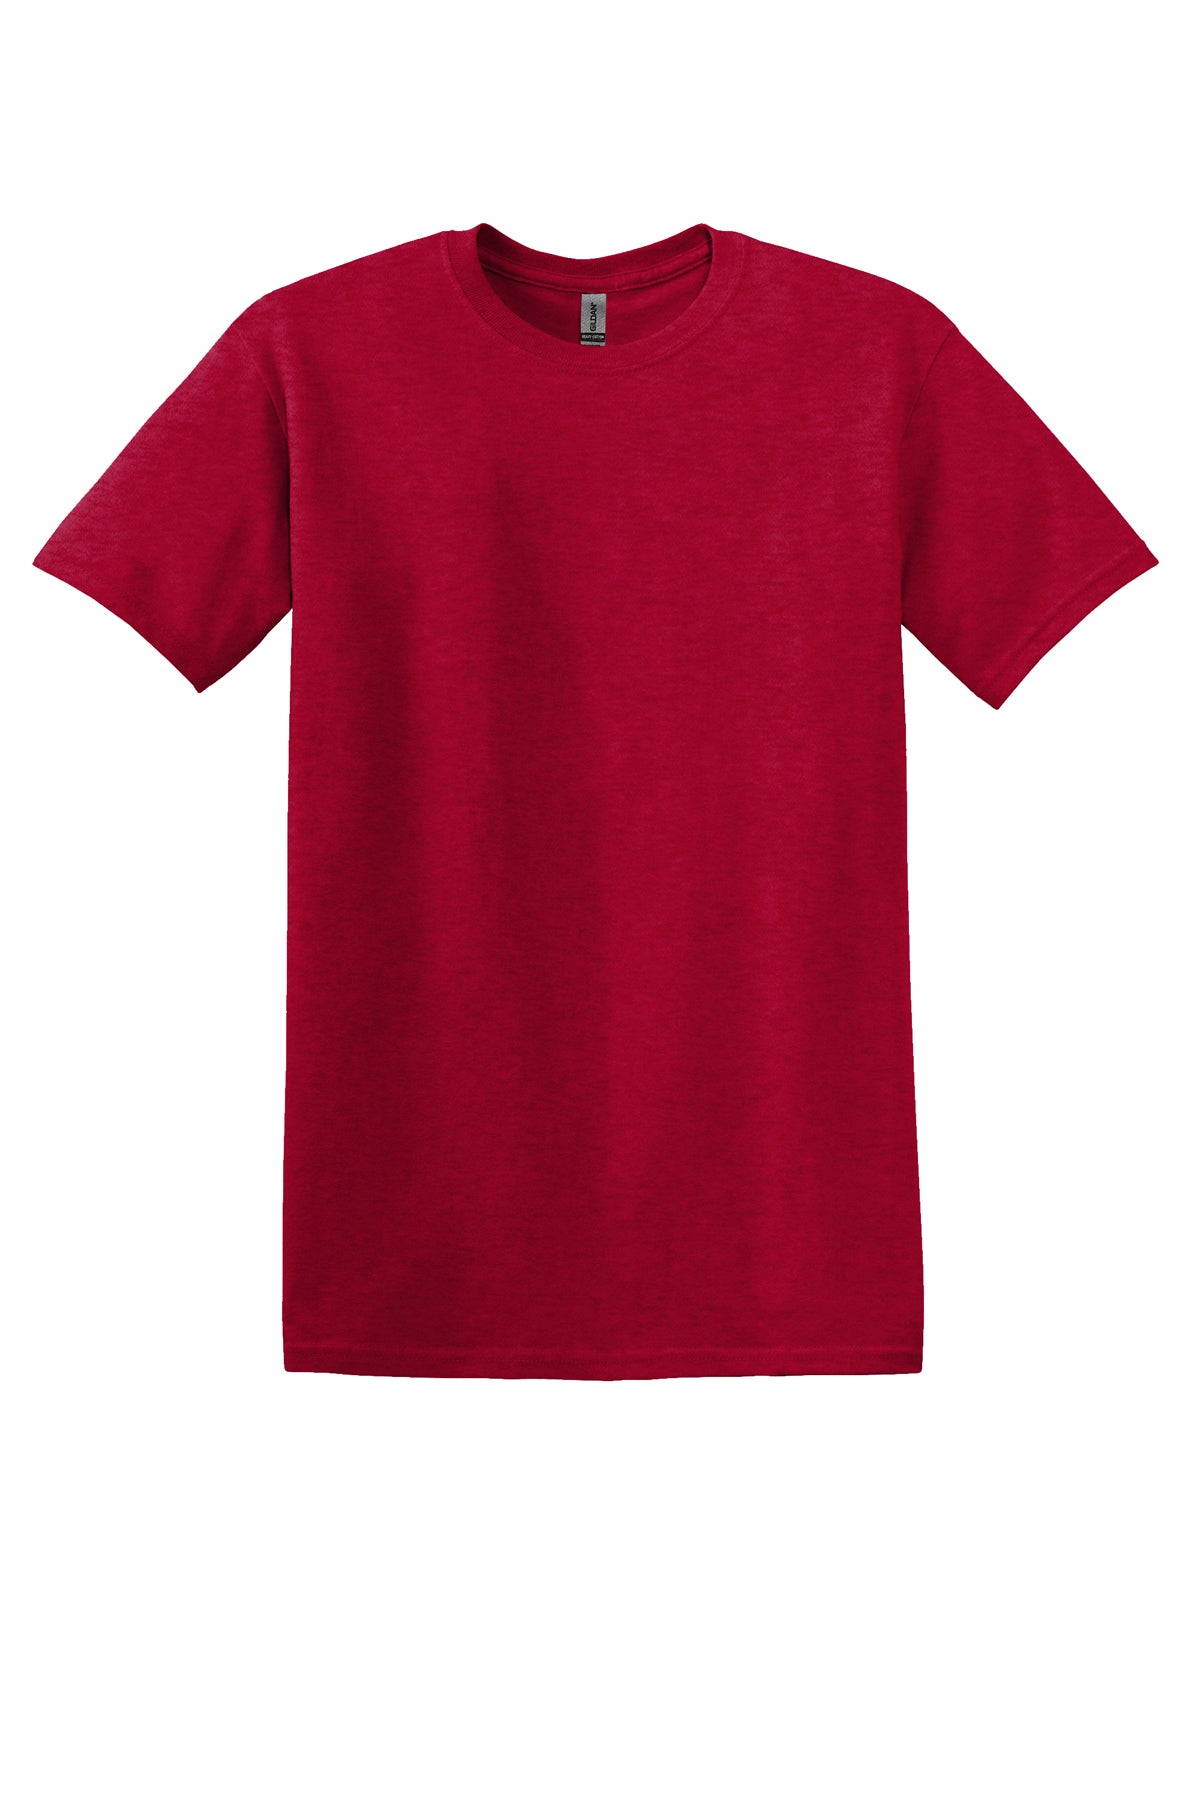 Gildan Mens/Unisex S/S Shirts Antique Cherry Red